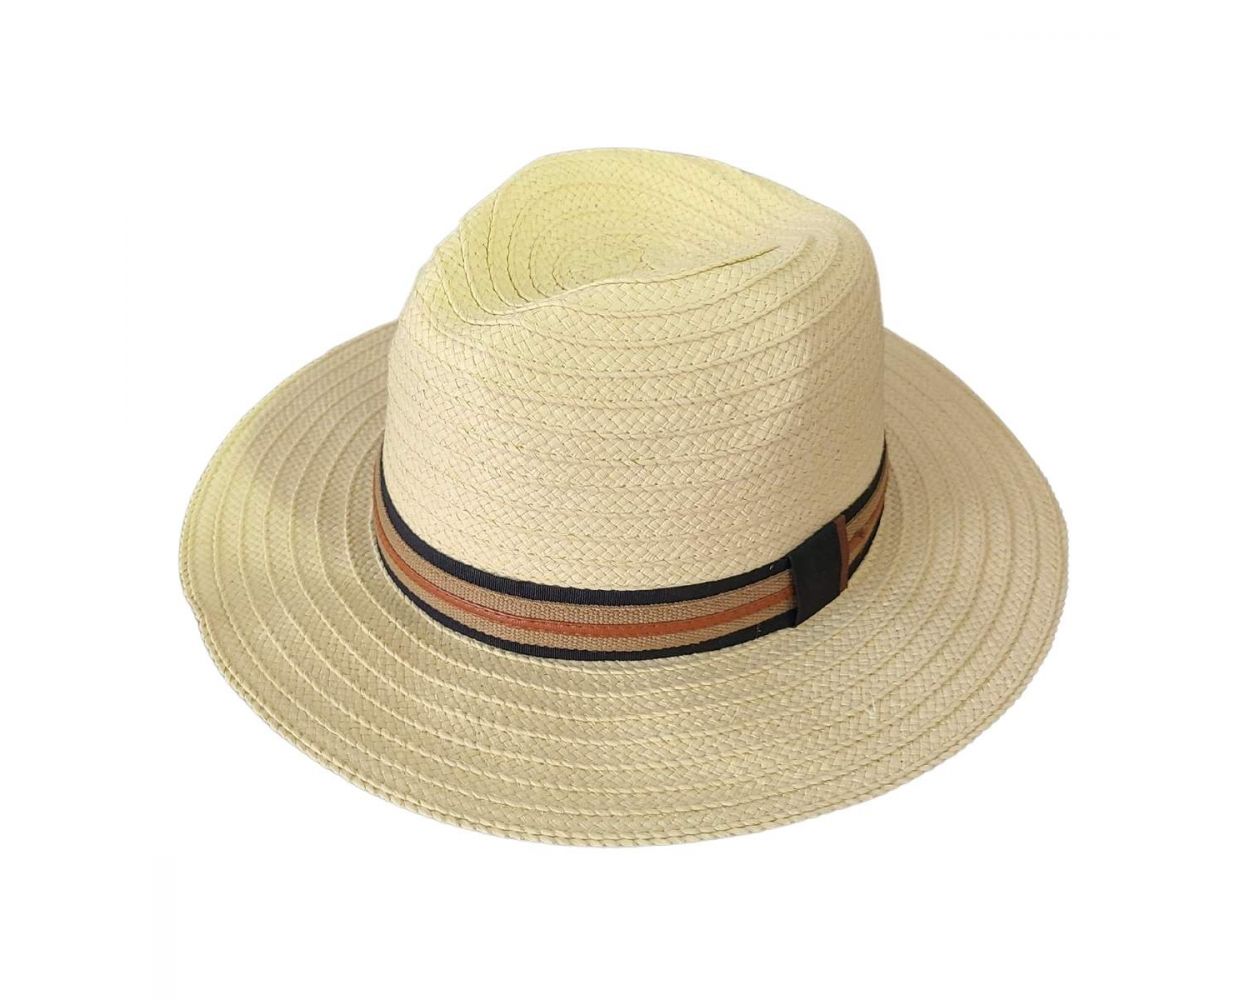 Backspin Men's Paperbraid Panama Hat